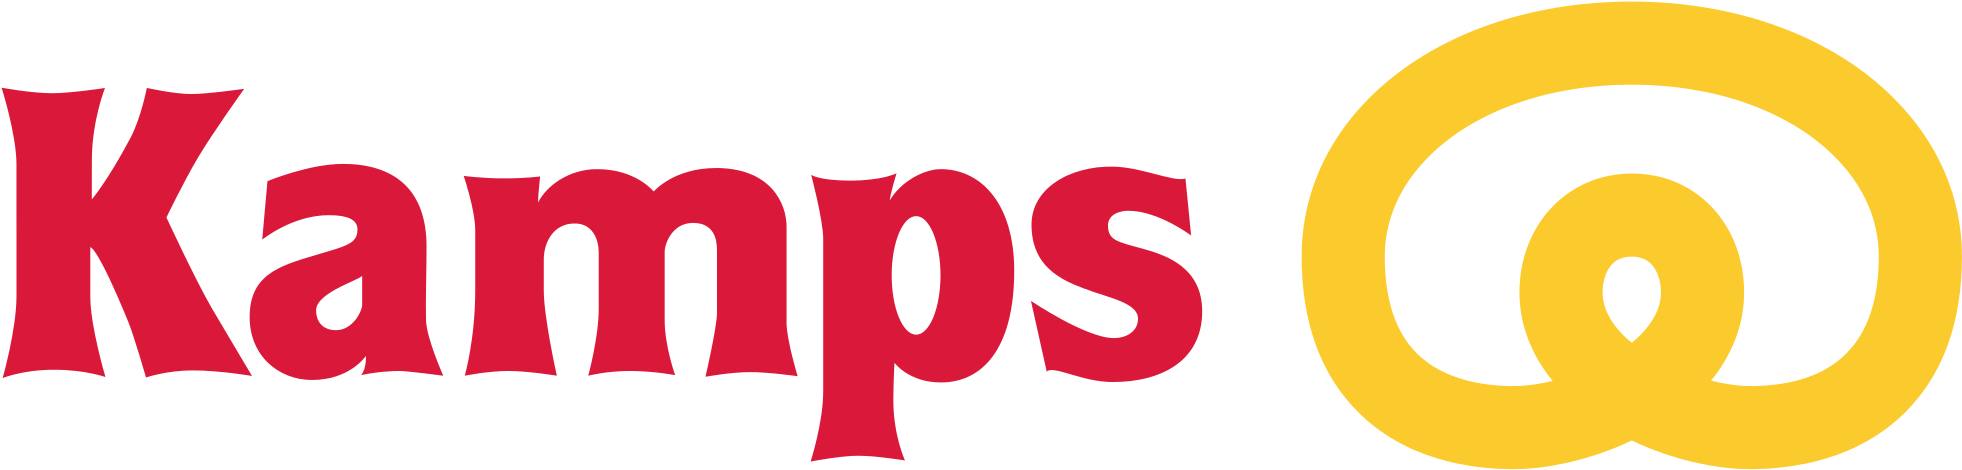 Chick Fil A Logo Image Shop Of Cliparts Rh Shopforclipart - Kamps Logo Png (2000x506)